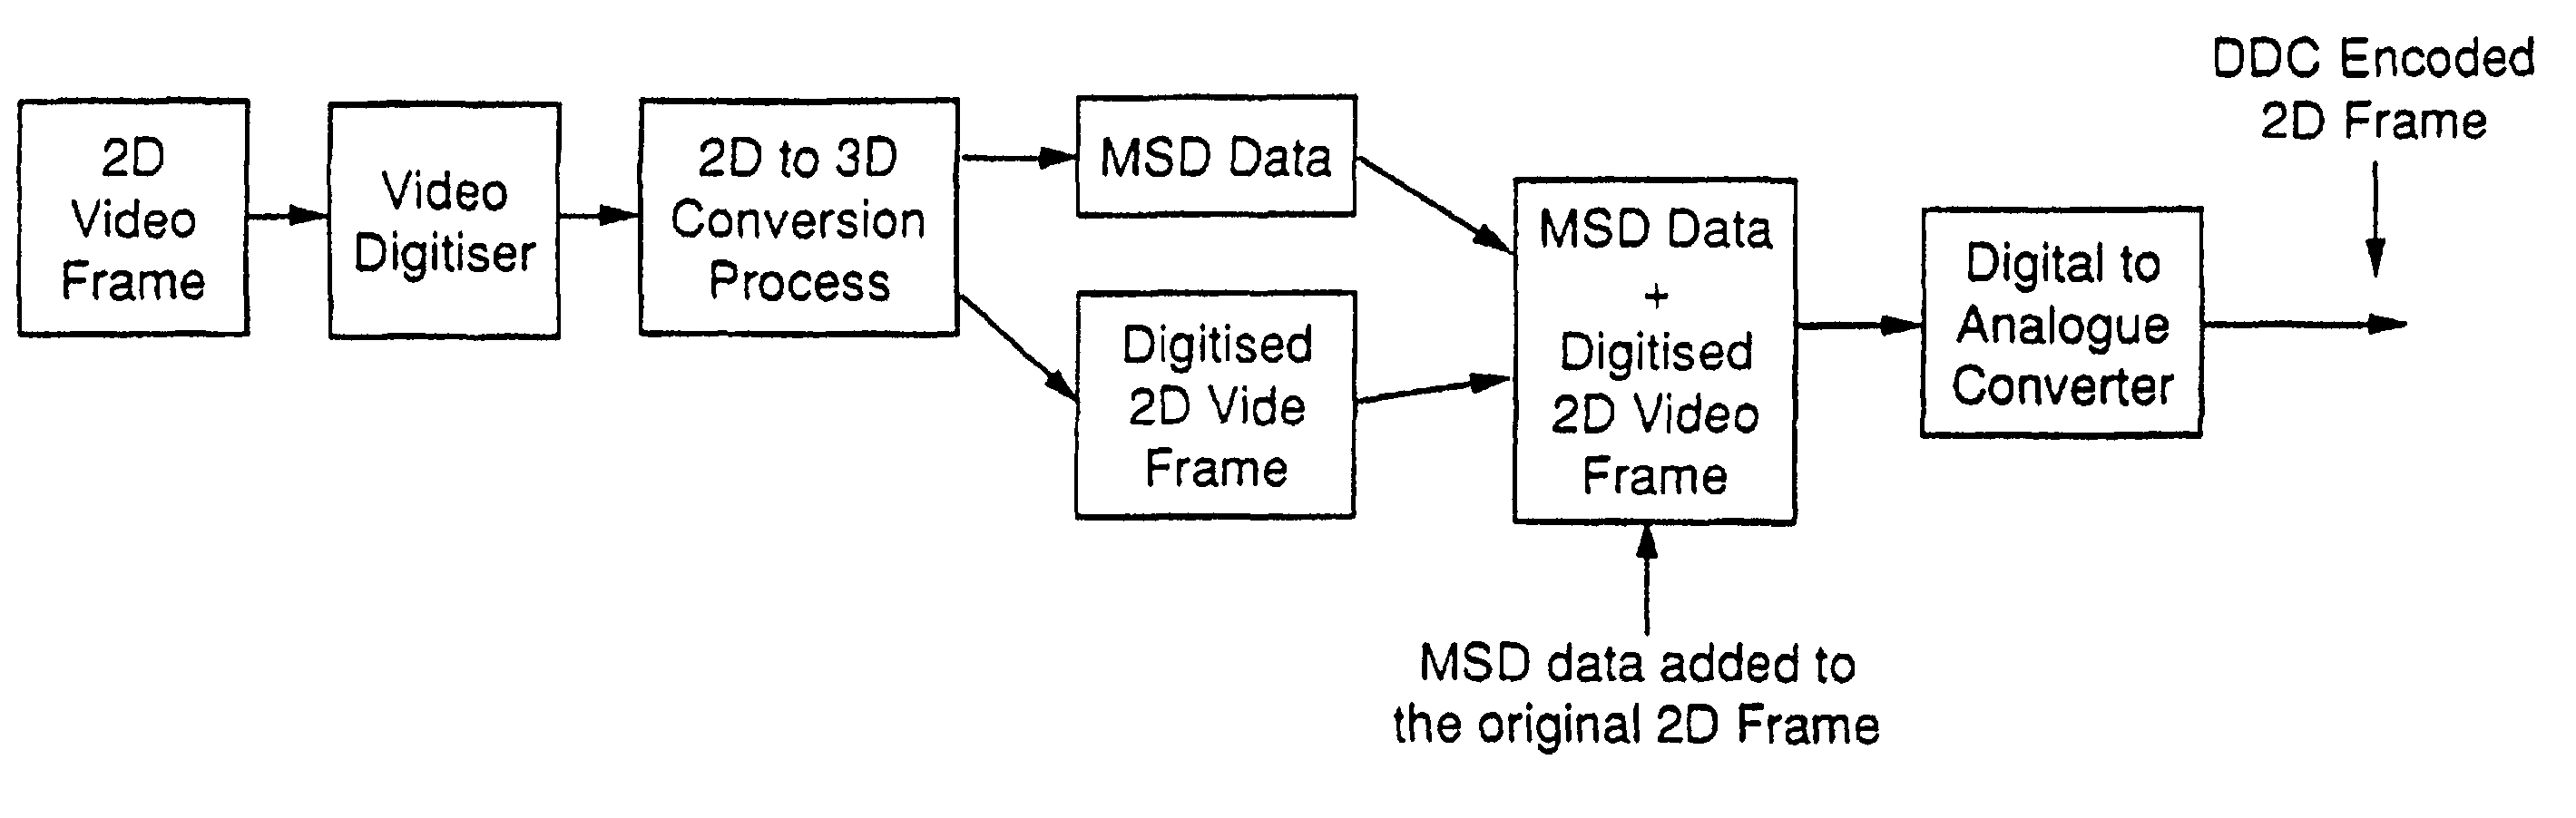 Image conversion and encoding techniques